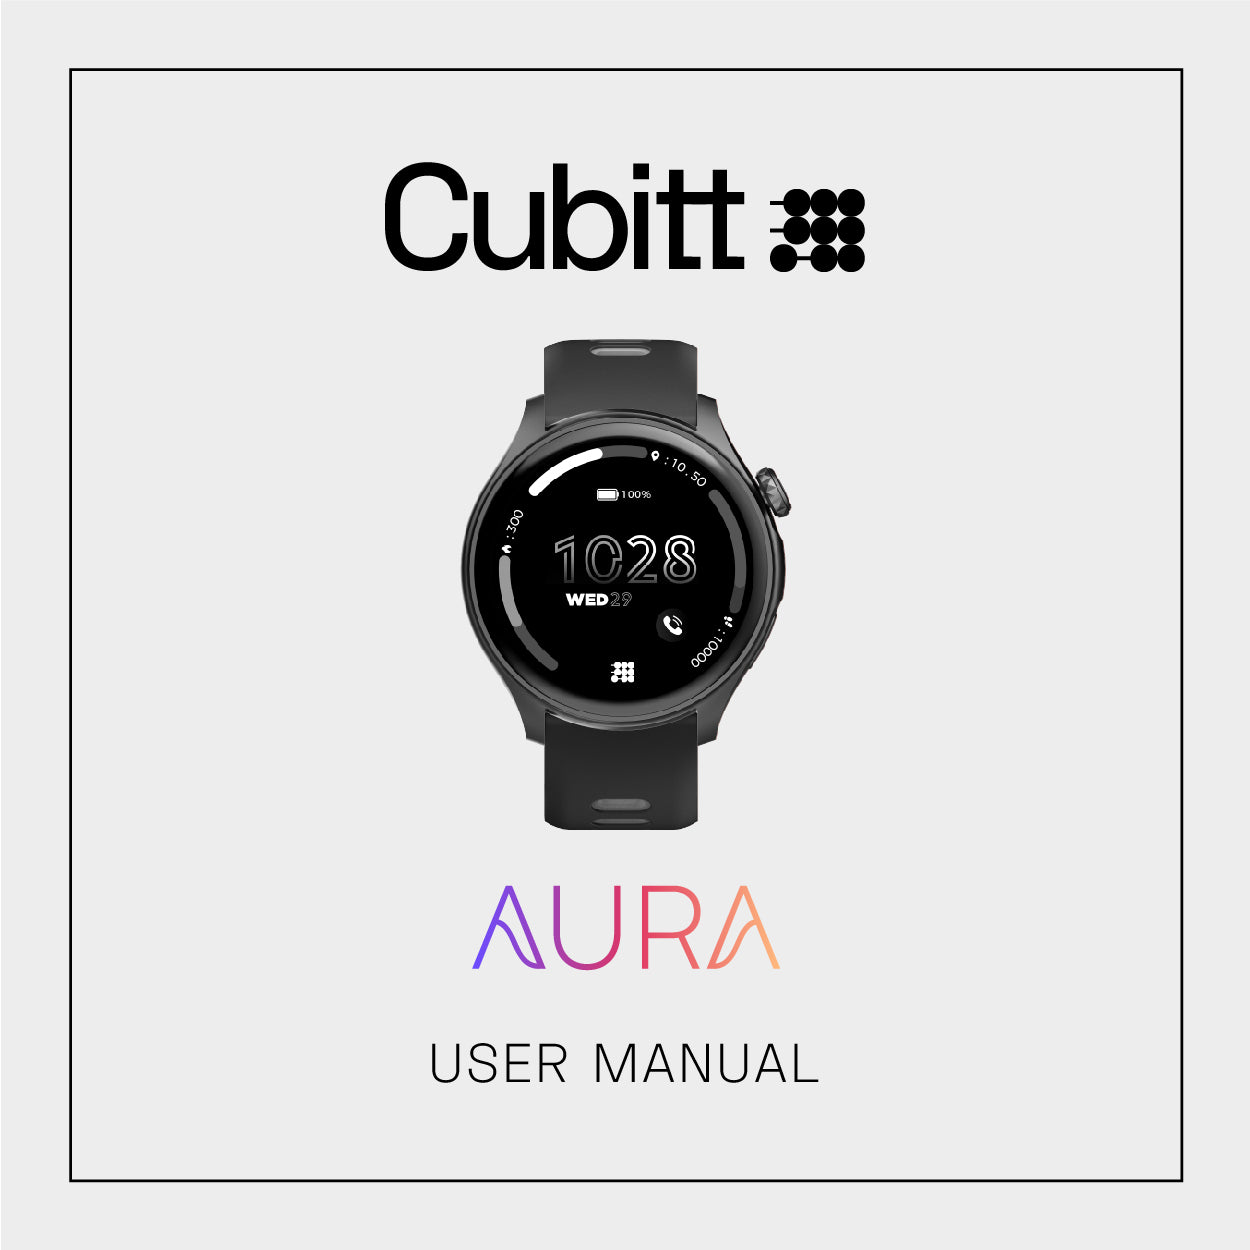 S8 Ultra Smart Watch Manual - tekkiwear Pro Series 8 Pairing Guide - YouTube